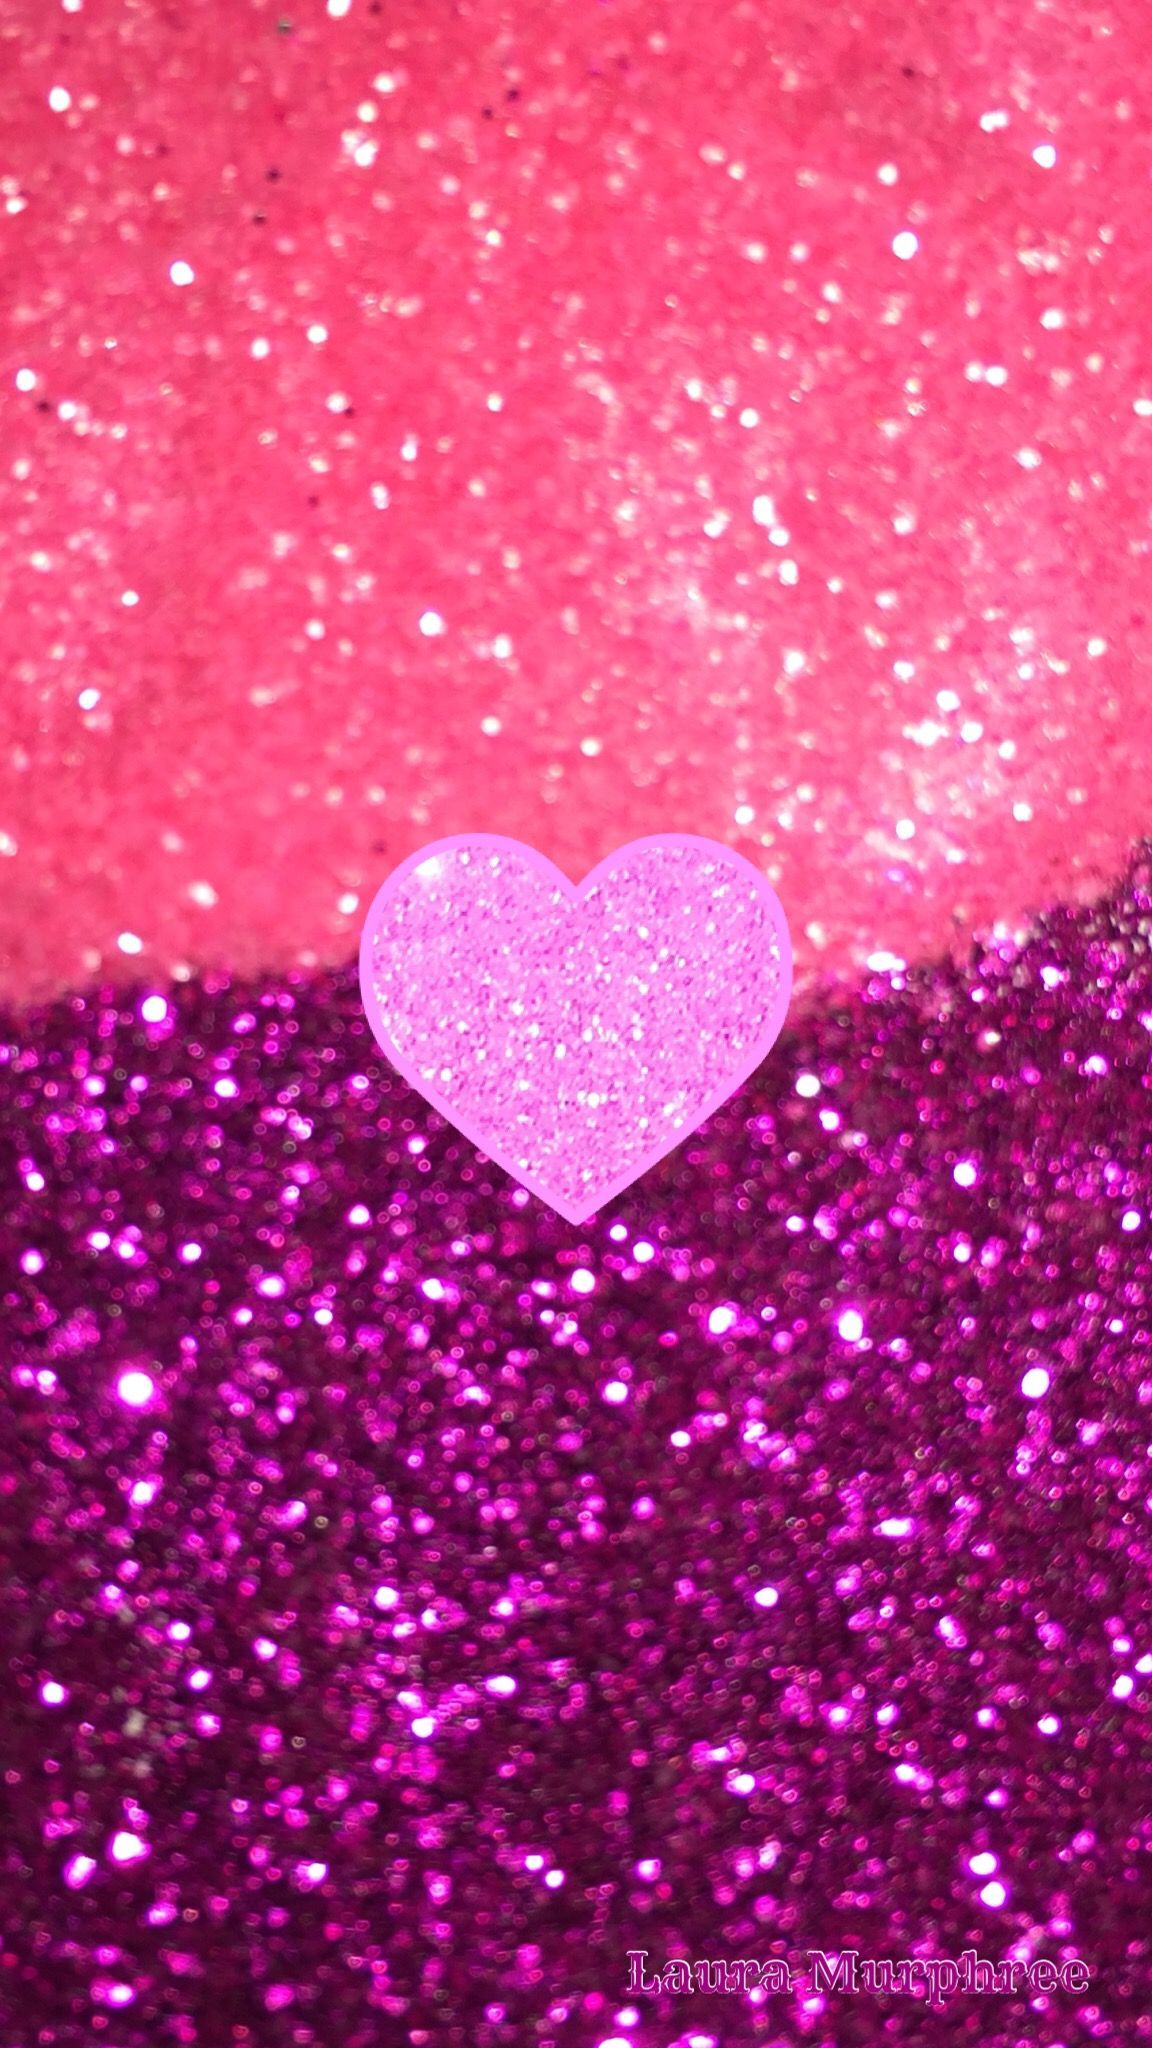 Glitter phone wallpaper sparkle background sparkling bling shimmer sparkles glitter glittery co. Glitter phone wallpaper, Glitter wallpaper, Pink wallpaper iphone